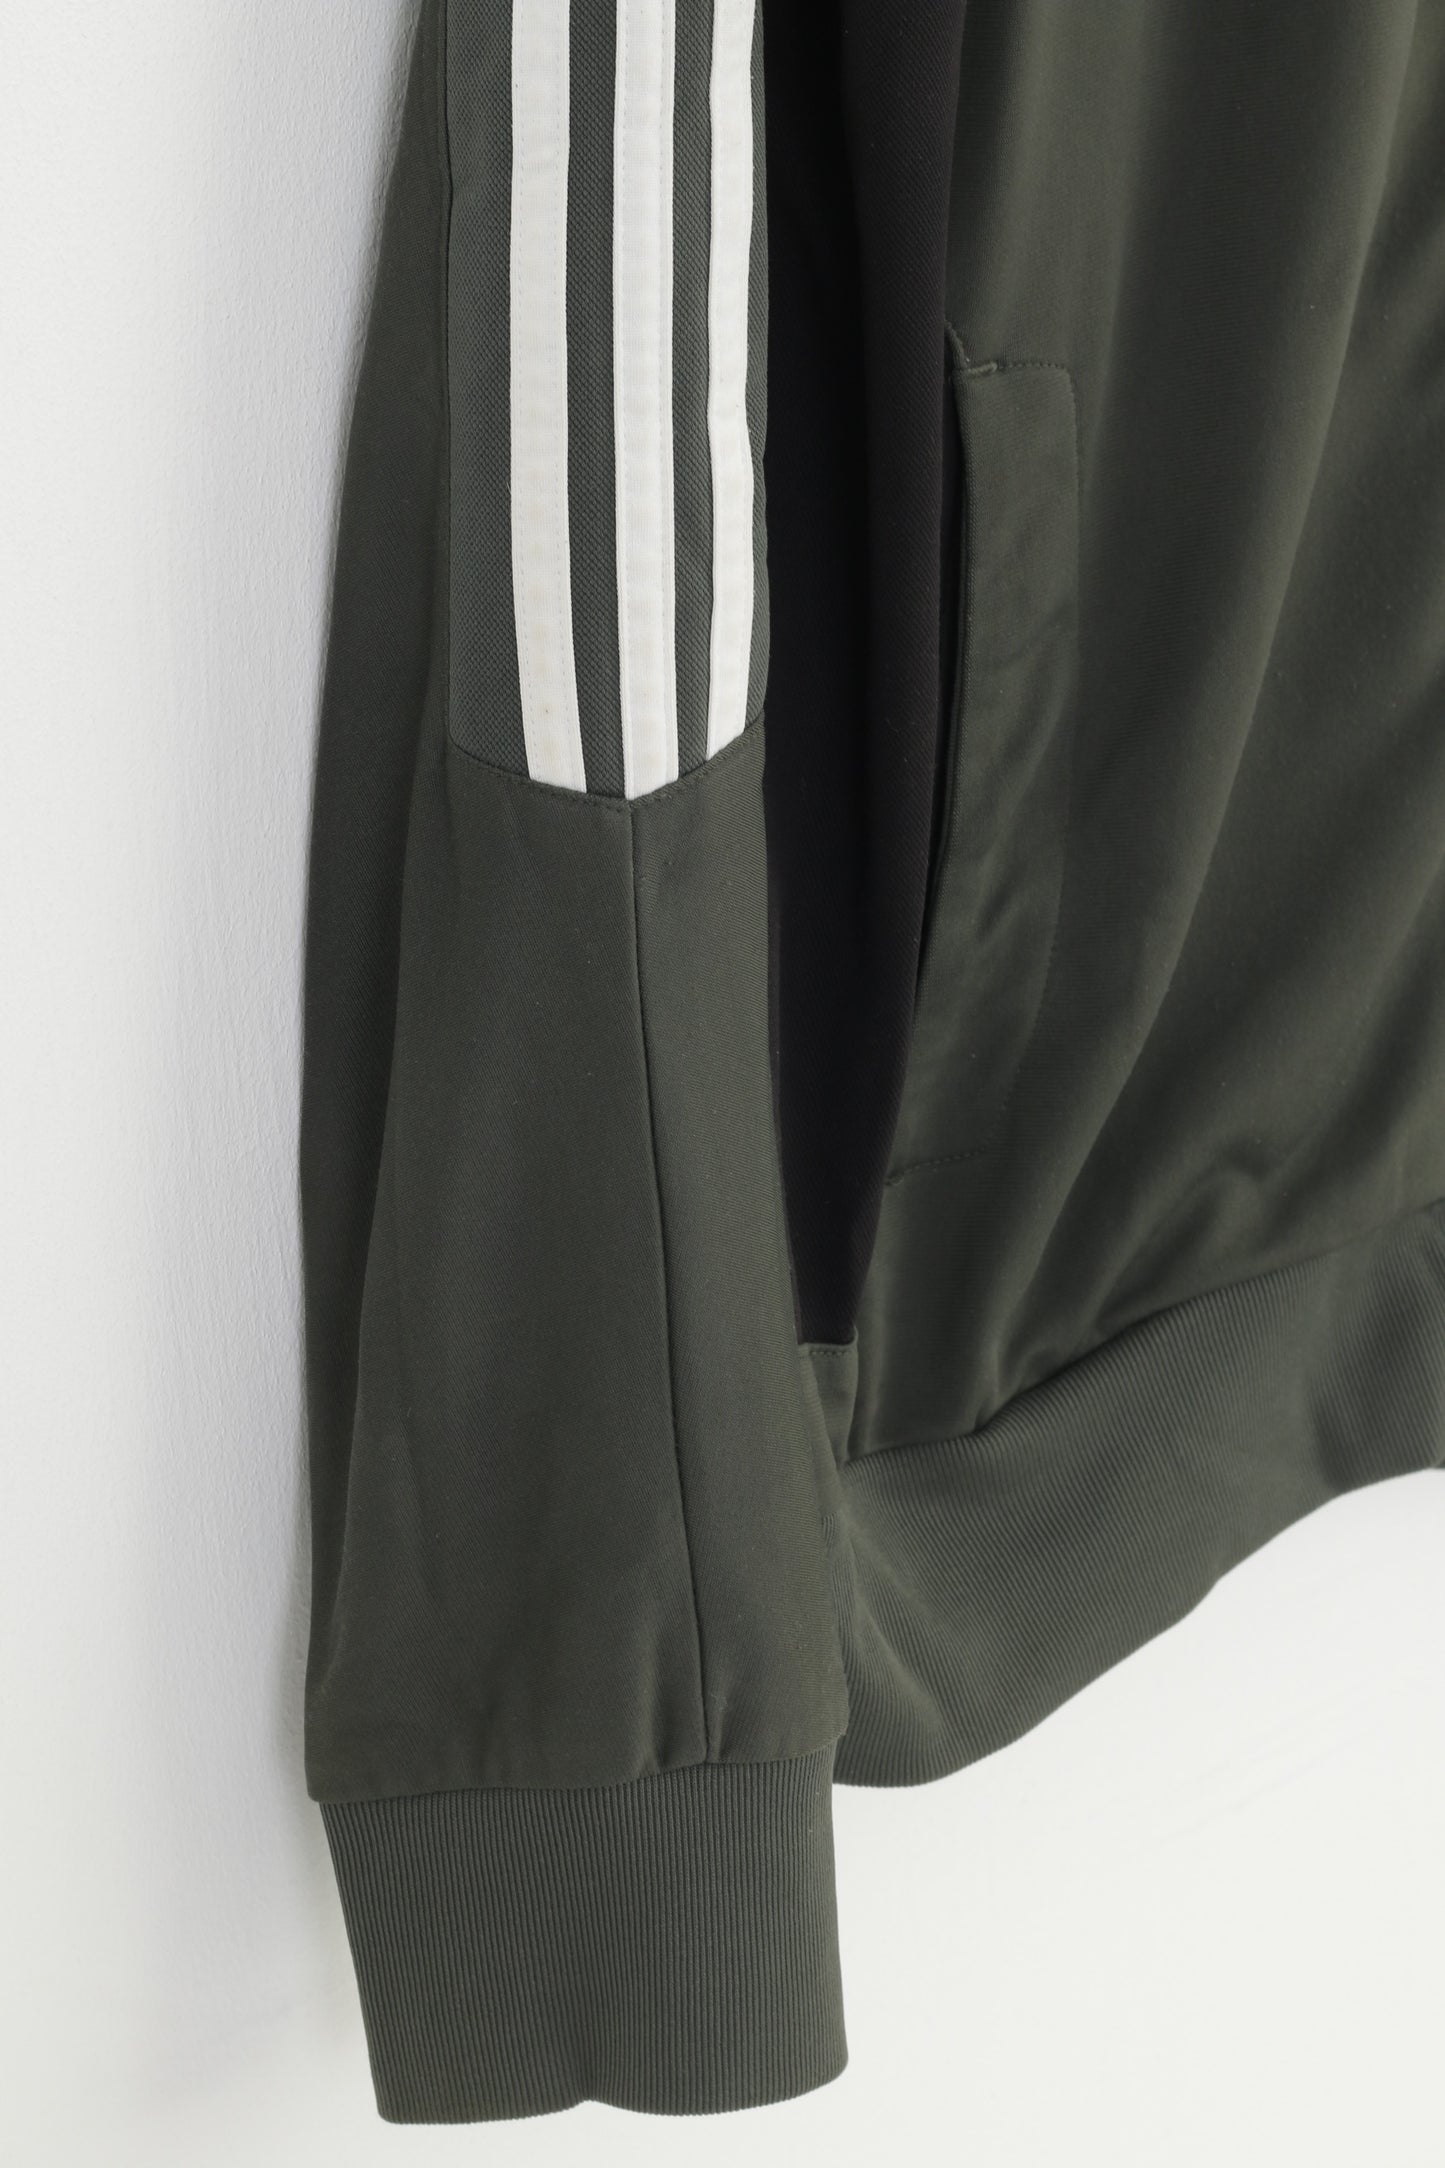 Adidas Men 44 L Sweatshirt Full Zipper Grey Sportswear Vintage Training 3 Stripes Top